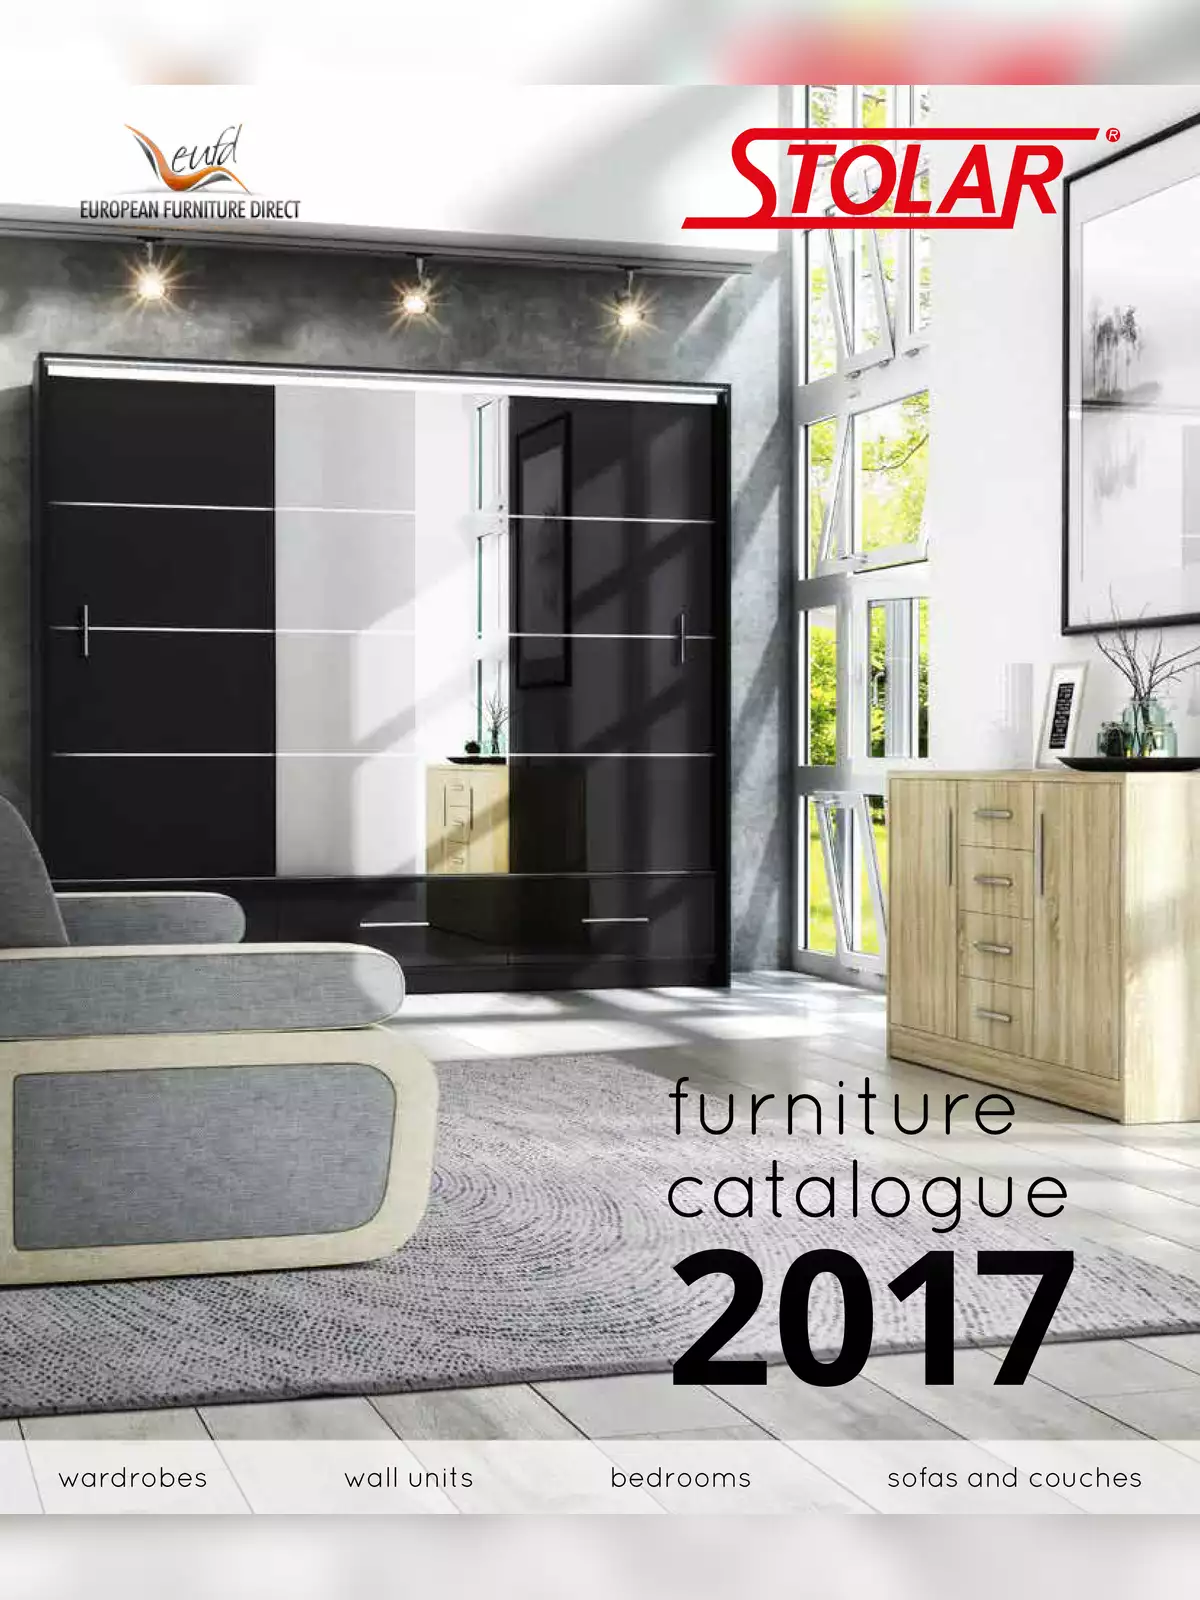 Furniture Catalogue Design